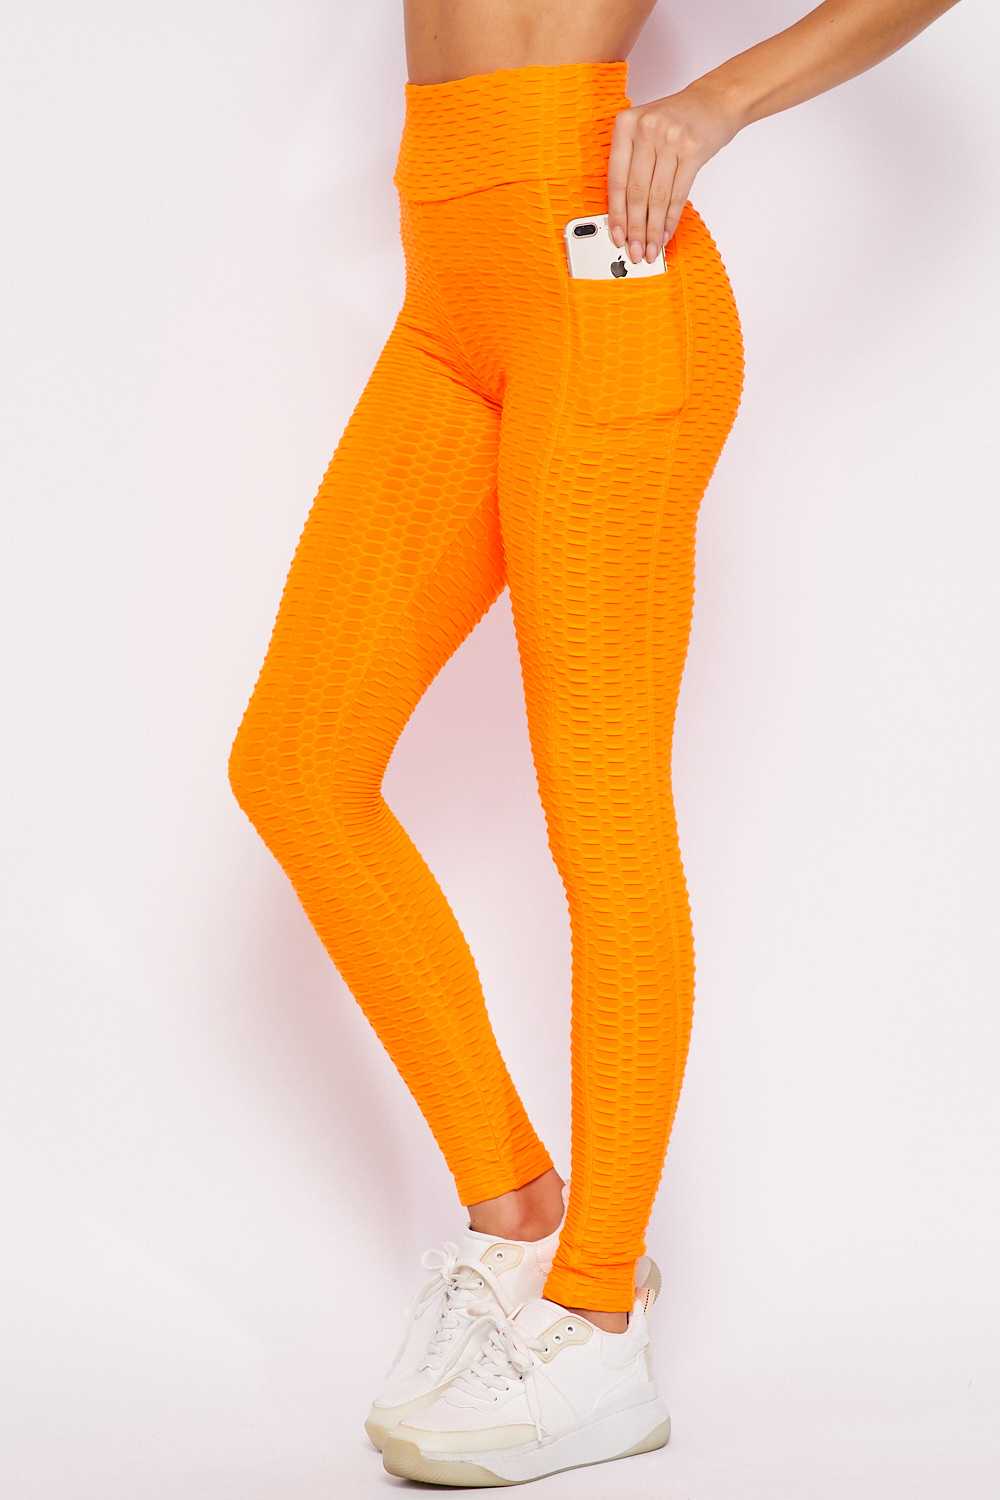 Pocket High Waist Scrunch Butt Lifting Leggings – Neon Orange - Entire Sale